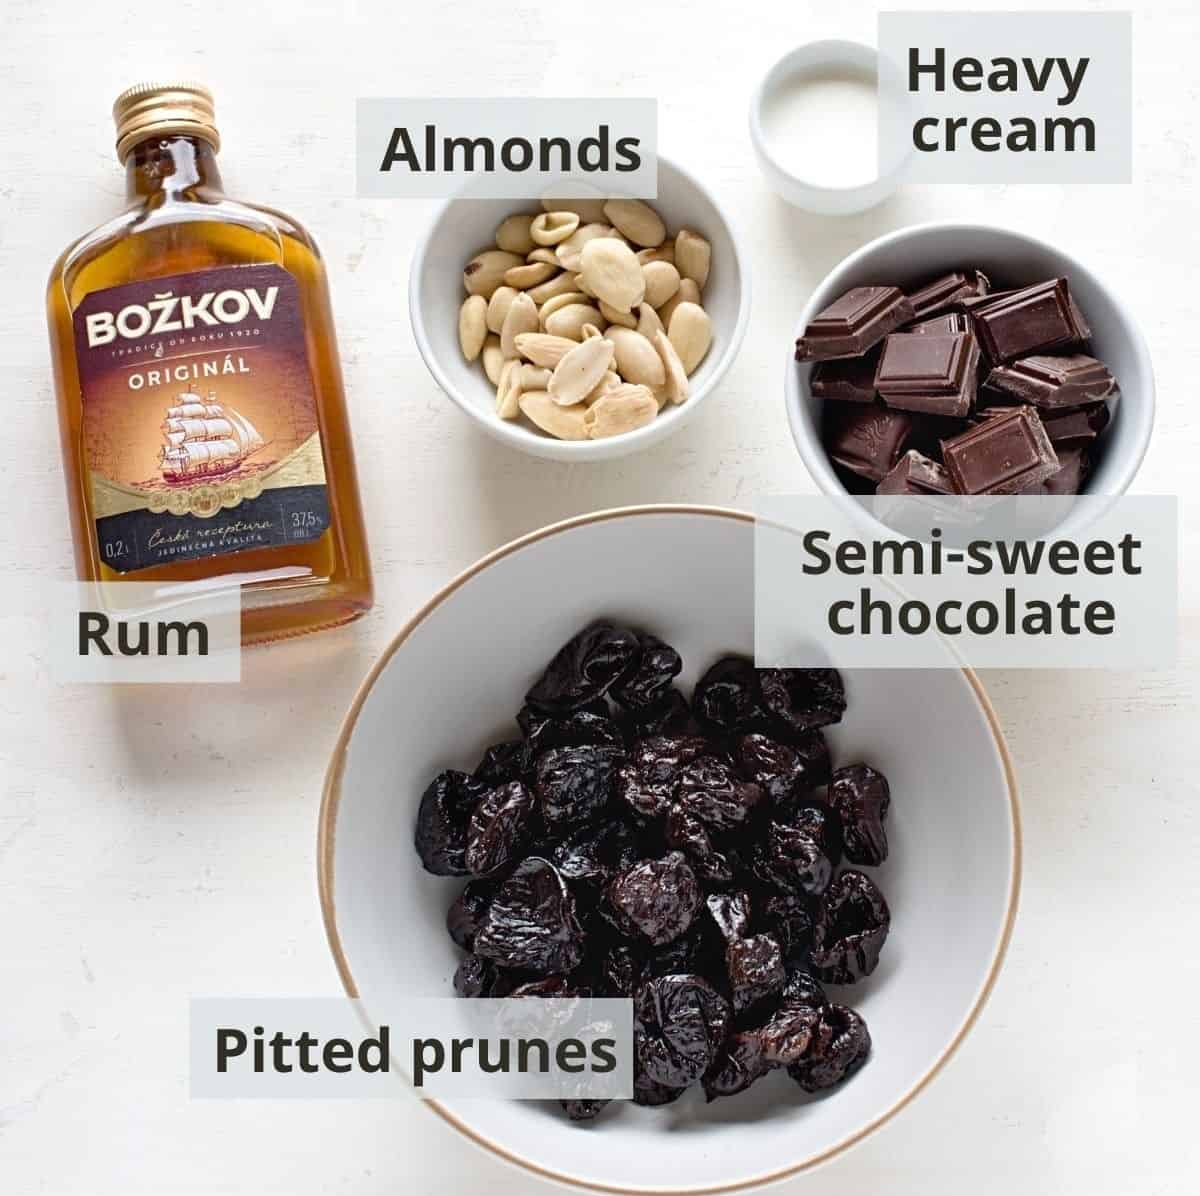 Almond stuffed prunes ingredients listed.